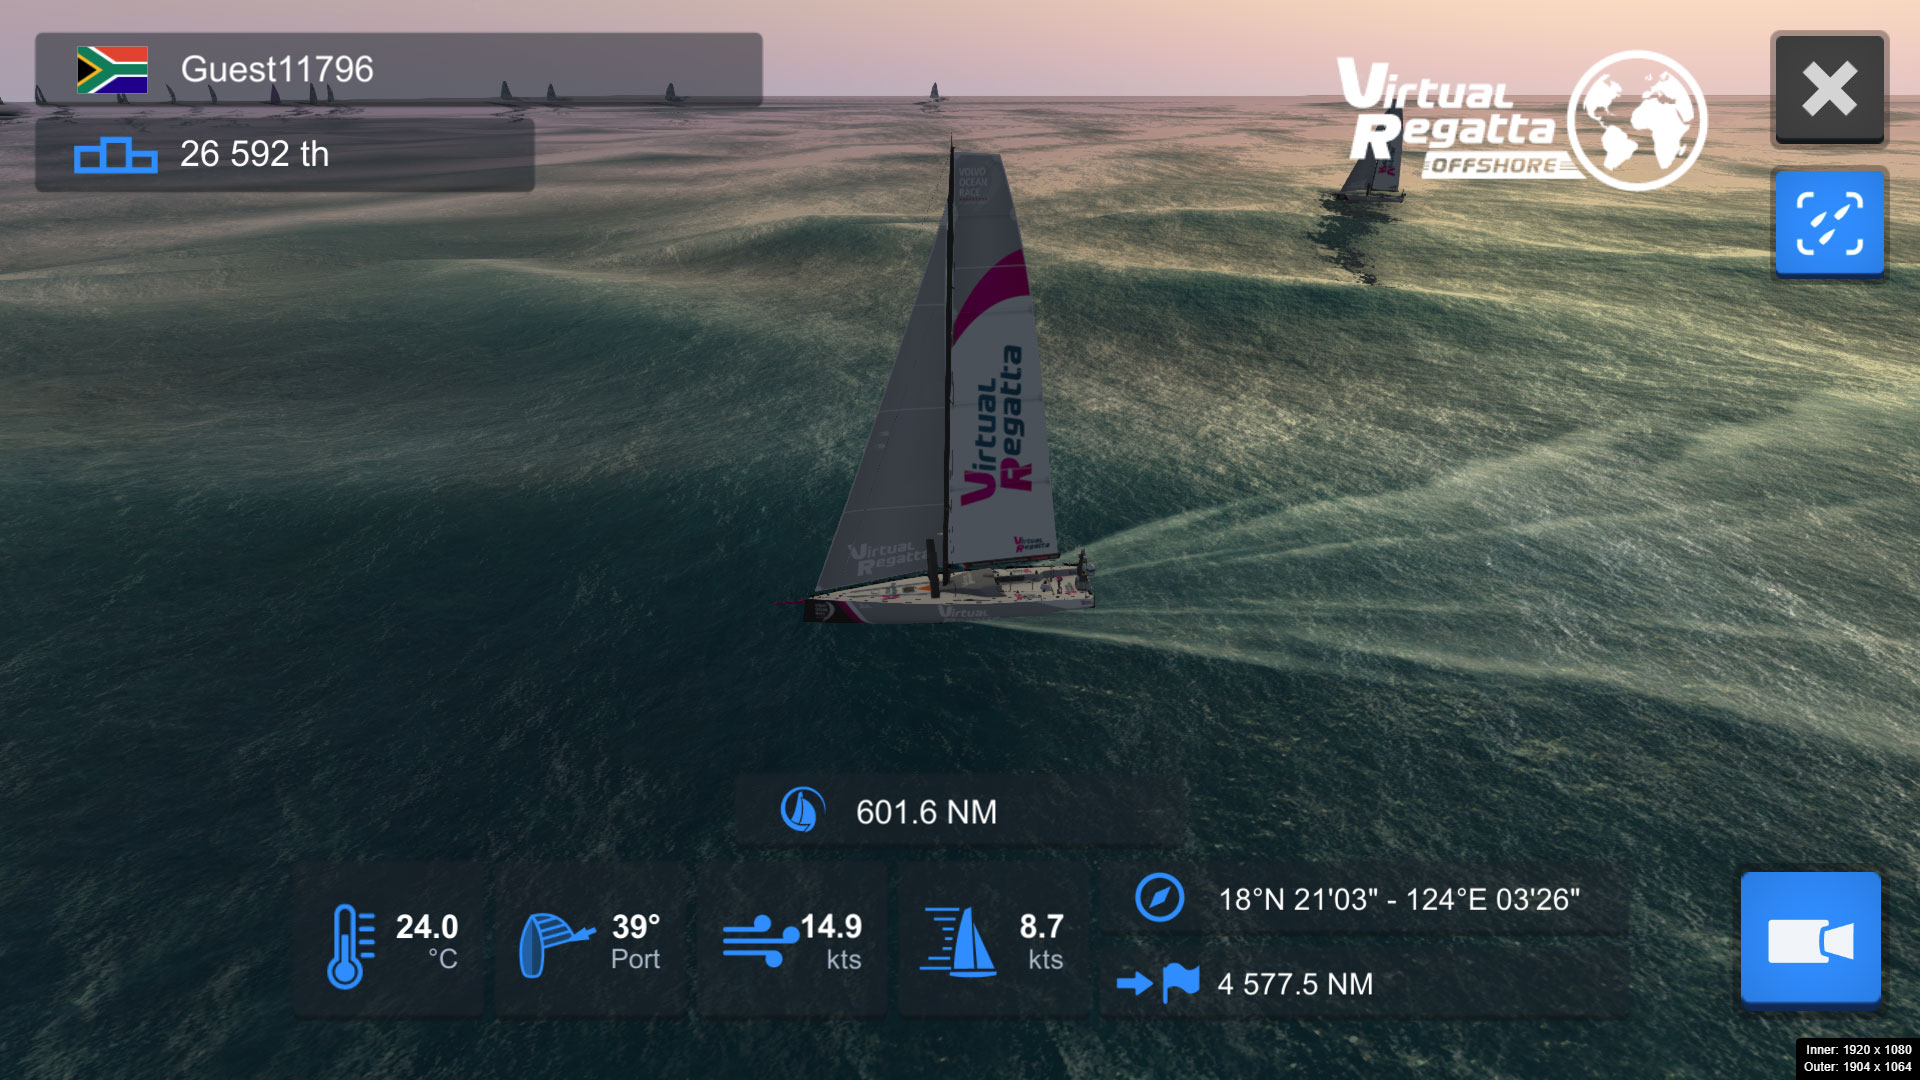 Volvo Ocean Race Virtual Regatta